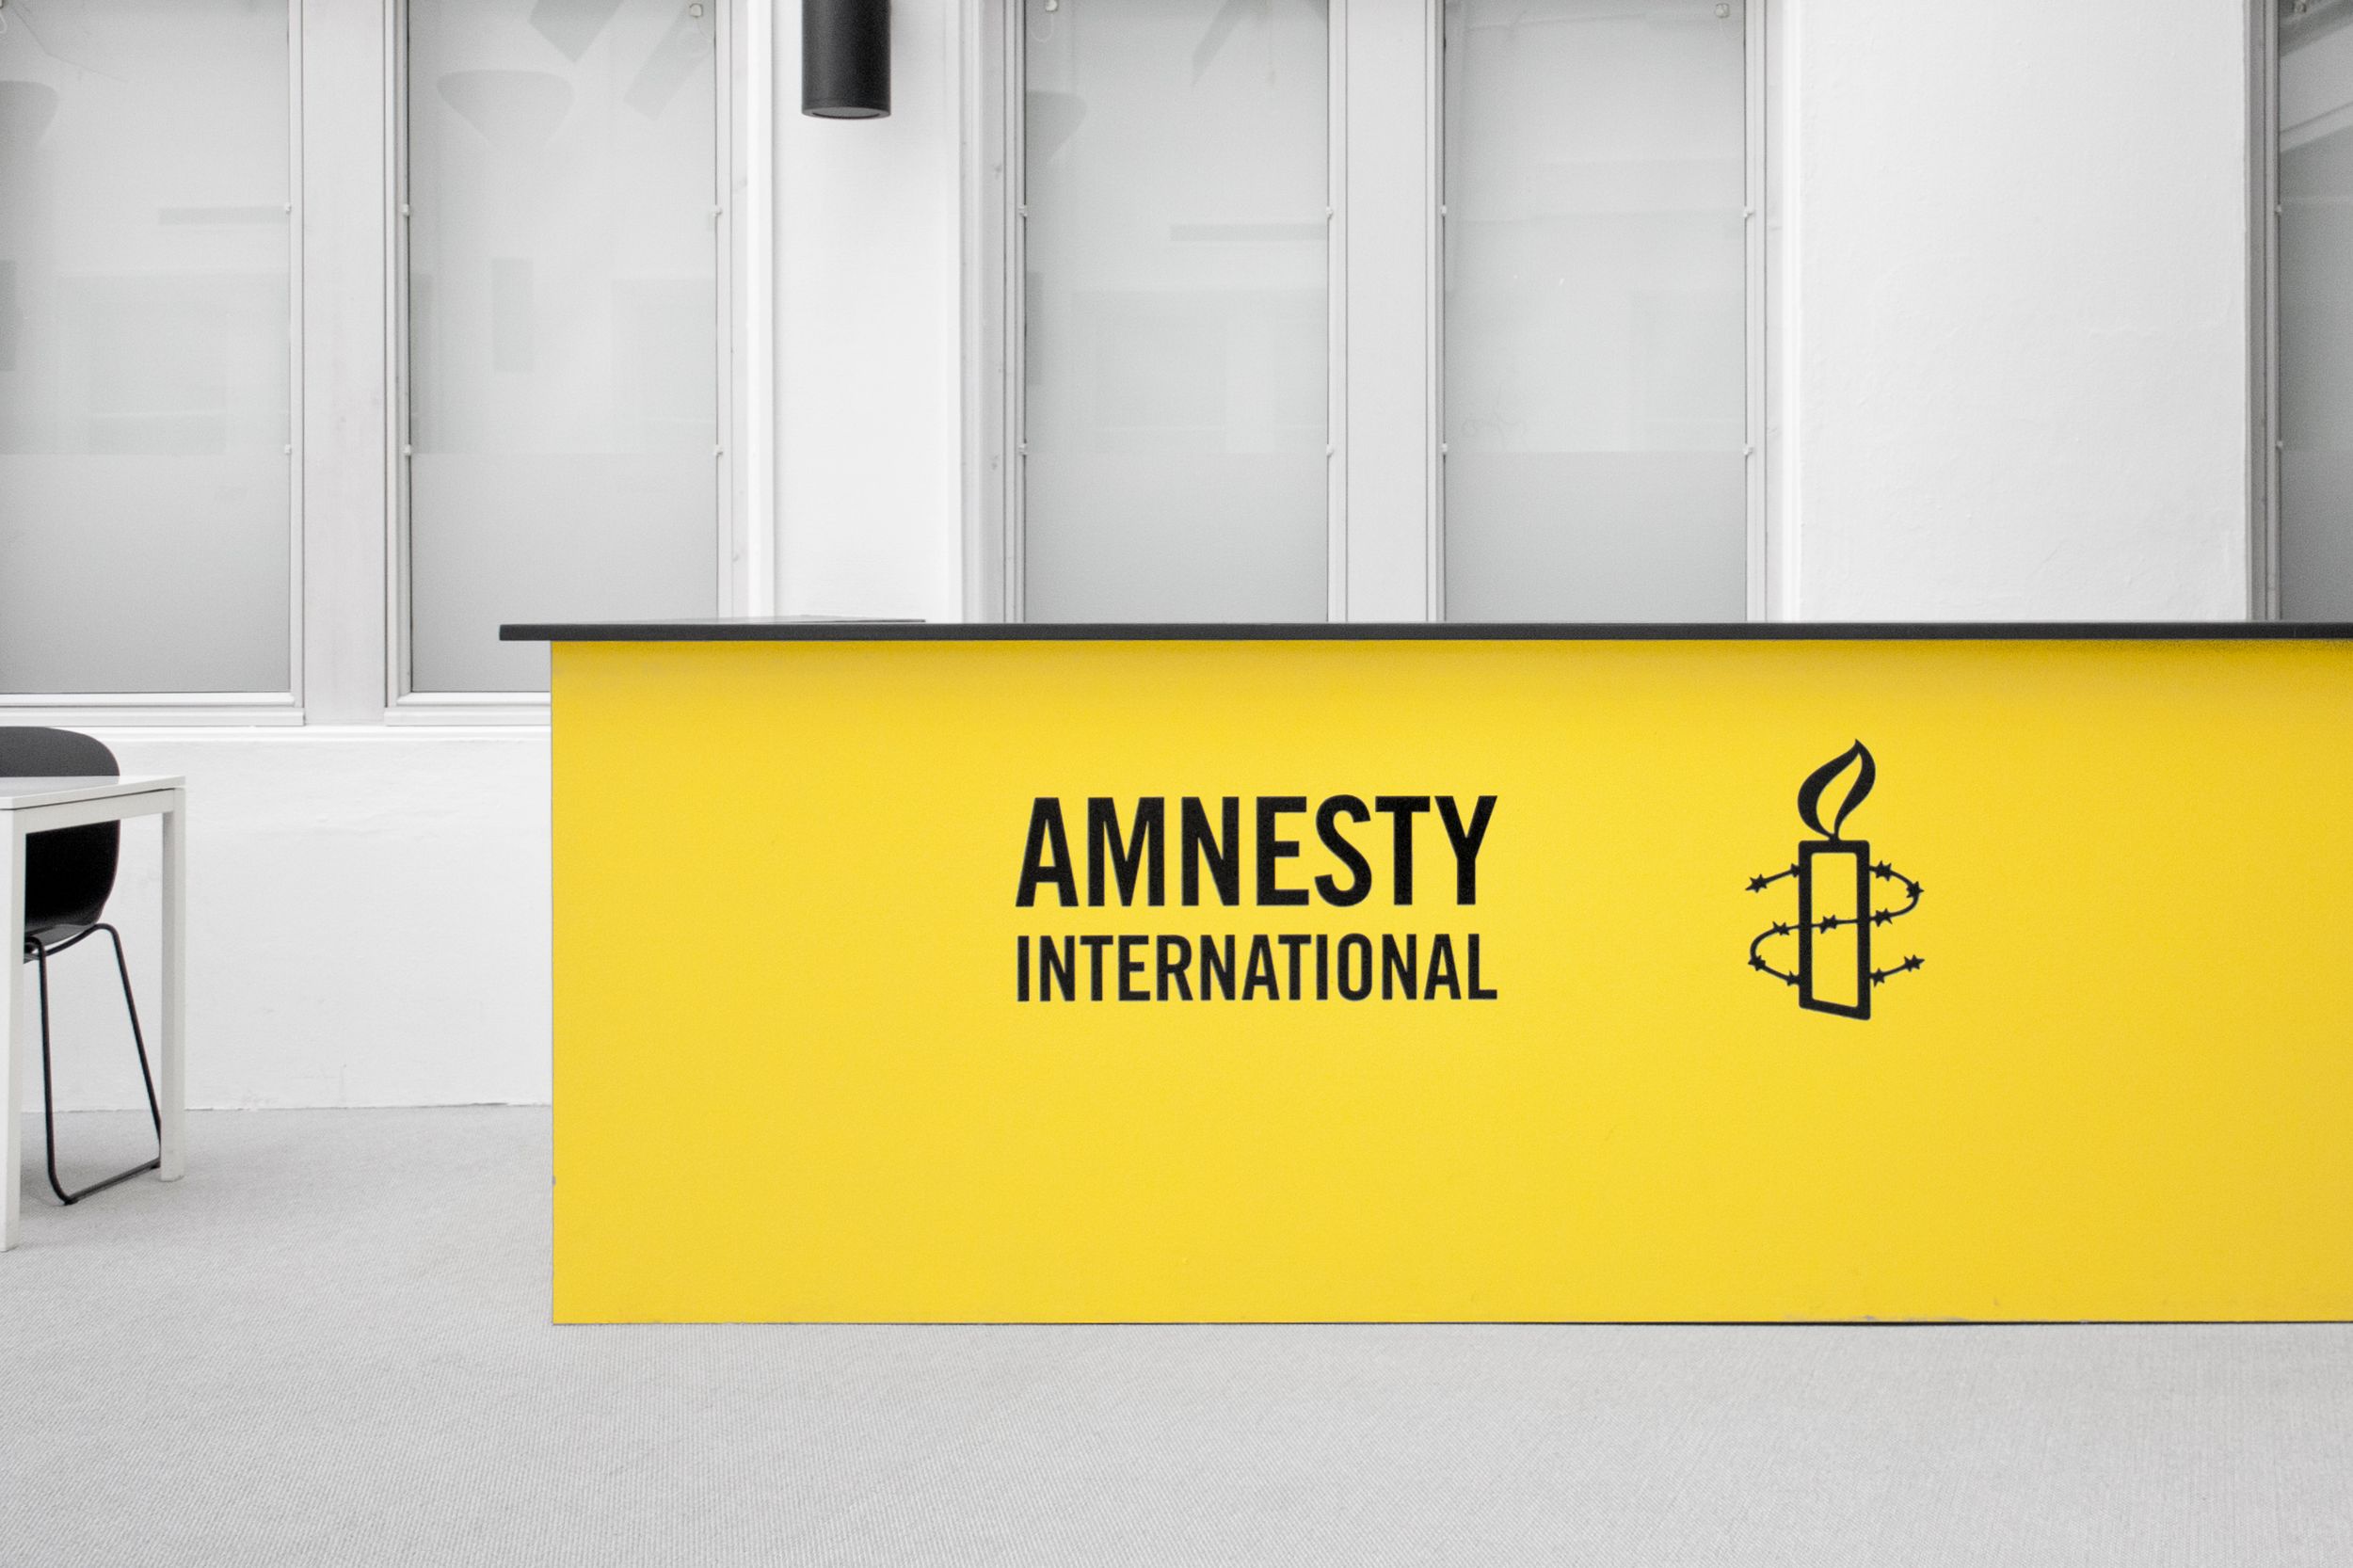 Auditorium for Amnesty International designed by Jonas Stokke